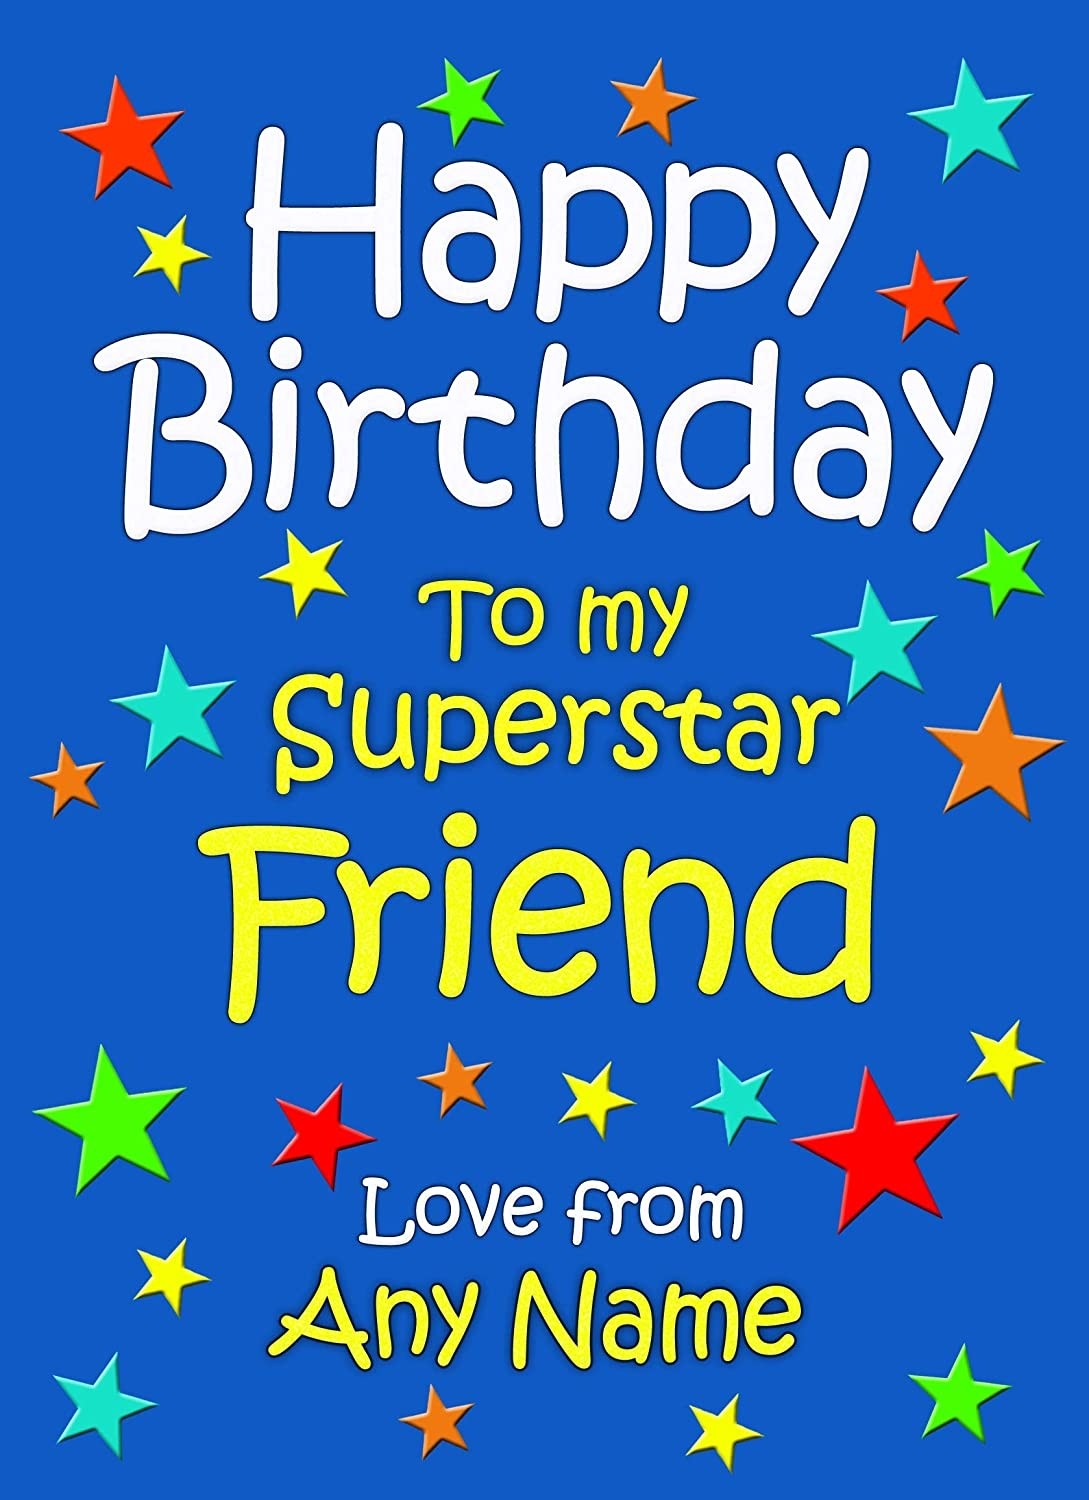 Personalised Friend Birthday Card (Blue)